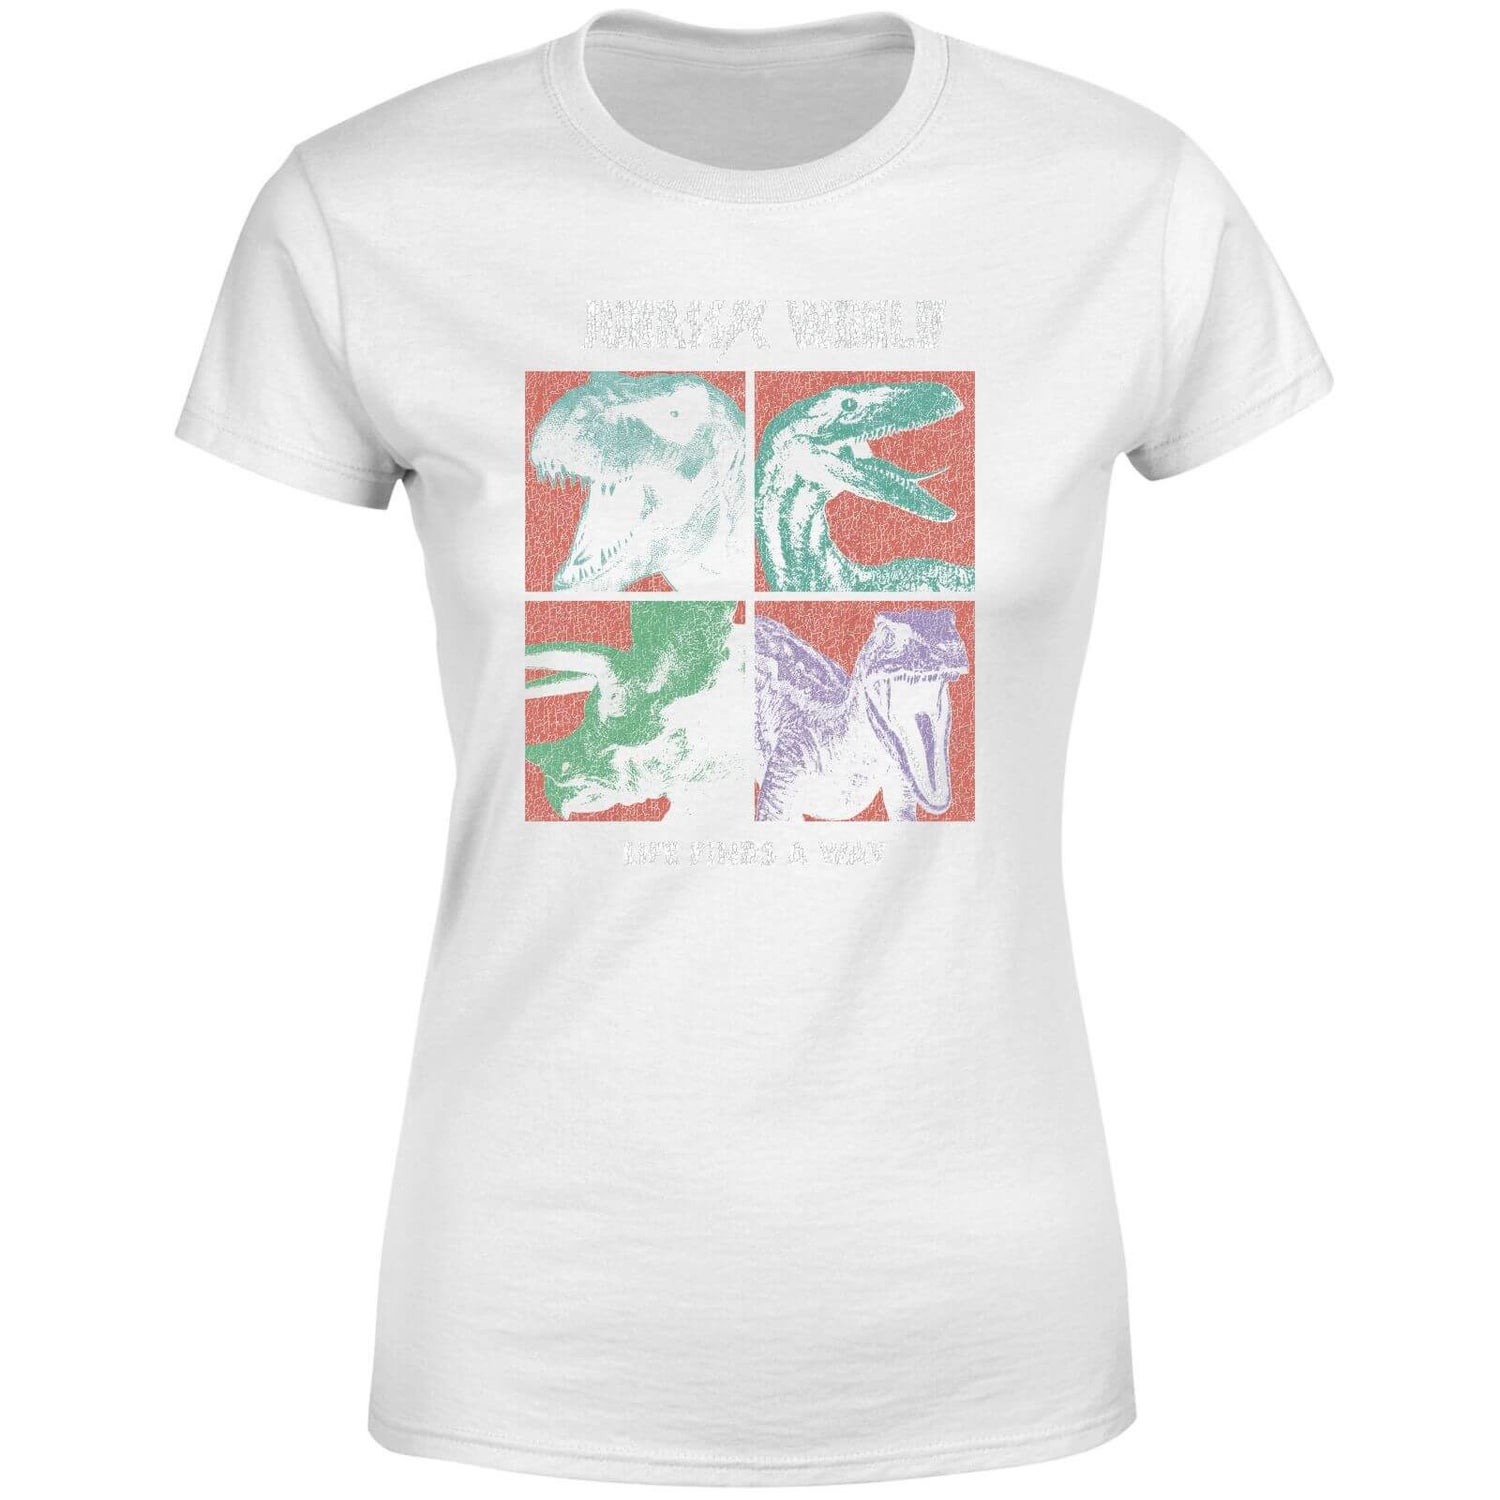 Jurassic Park World Four Colour Faces Women's T-Shirt - White